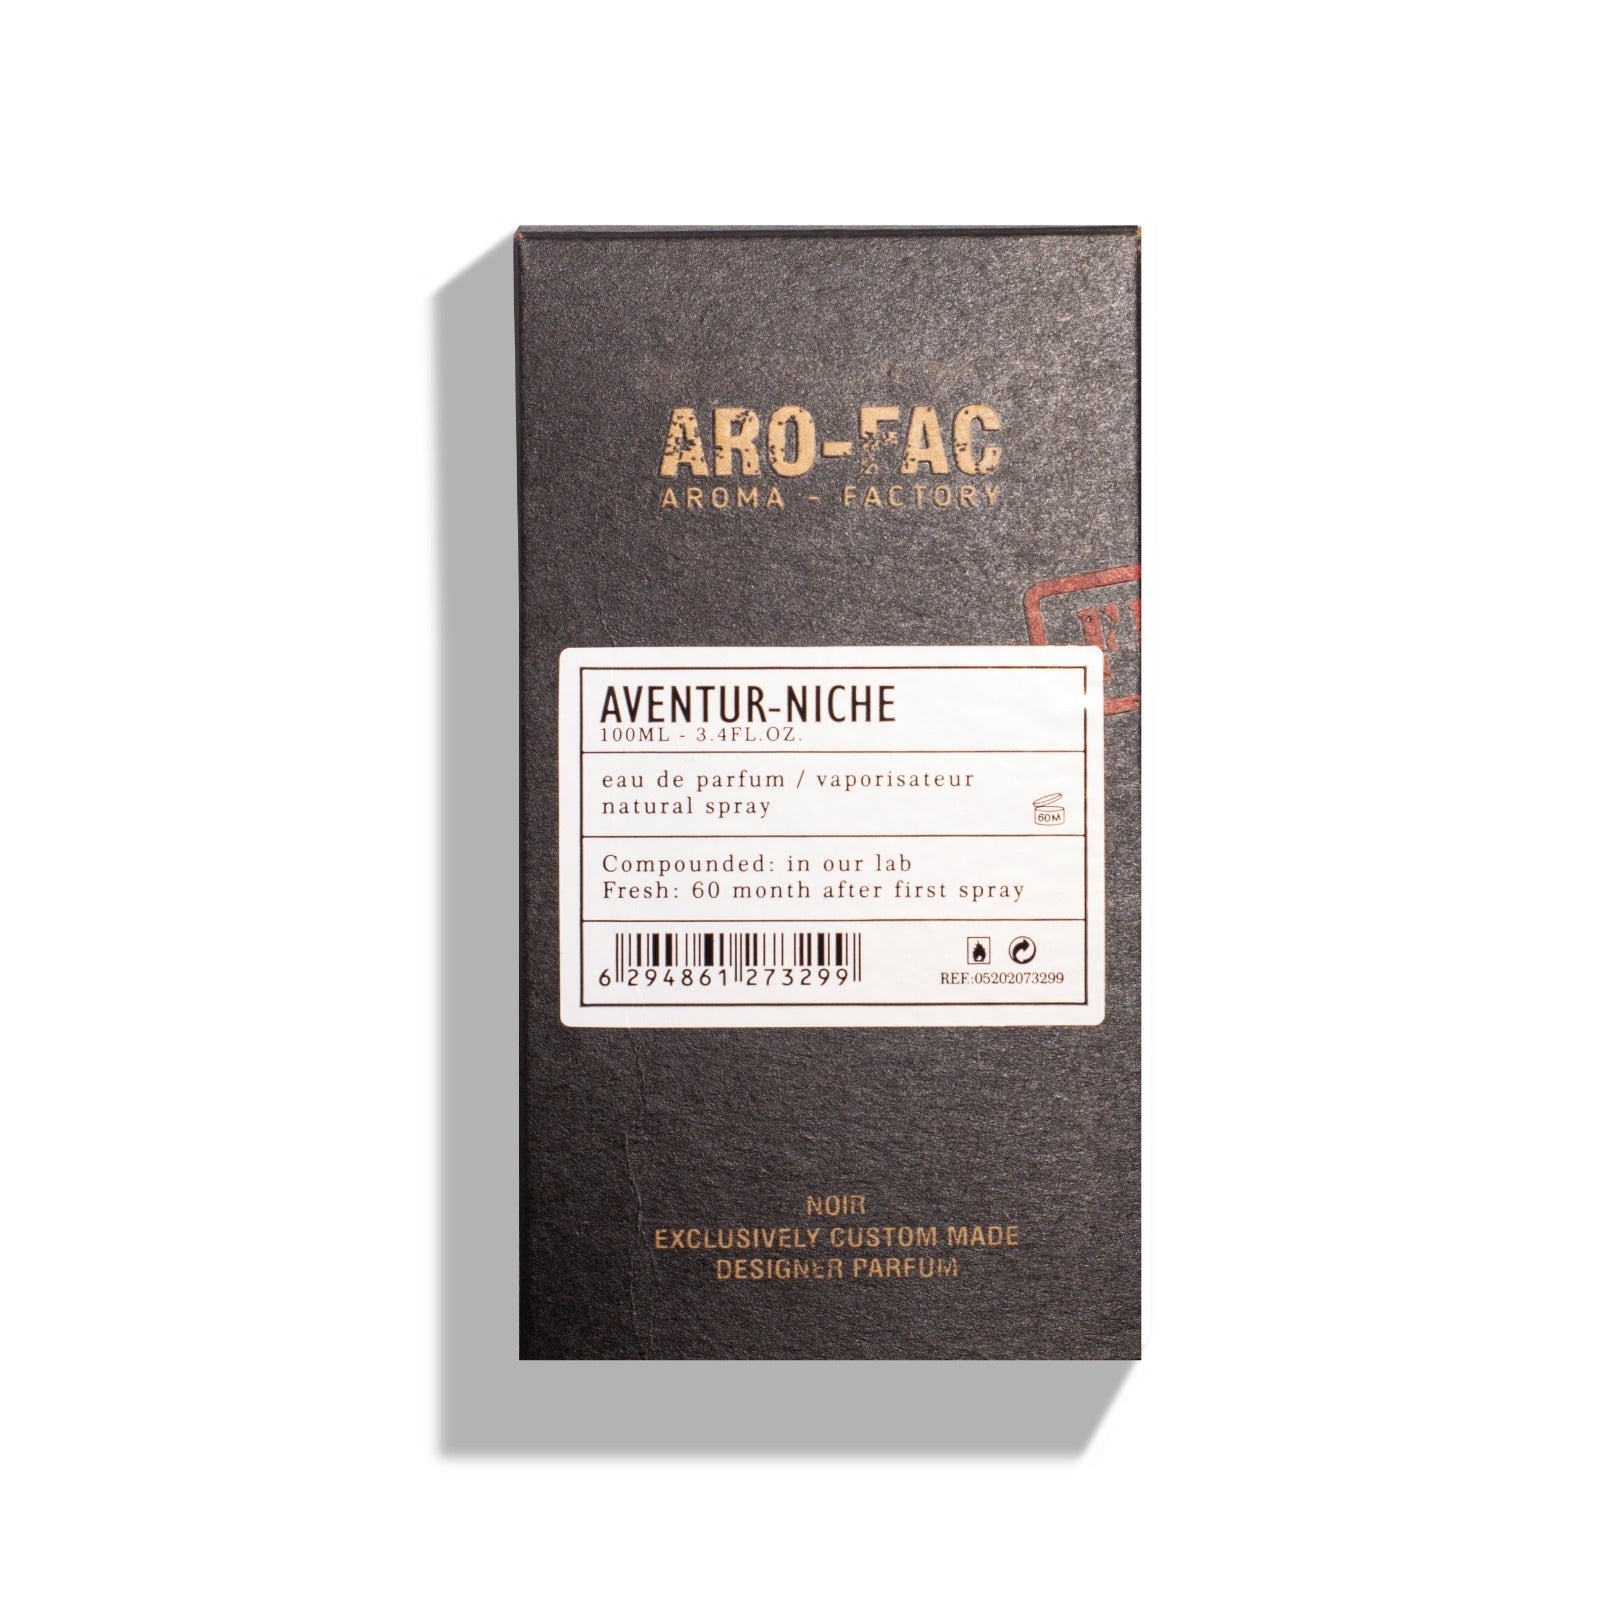 ARO-FAC AVENTUR NICHE - AMD PERFUMES